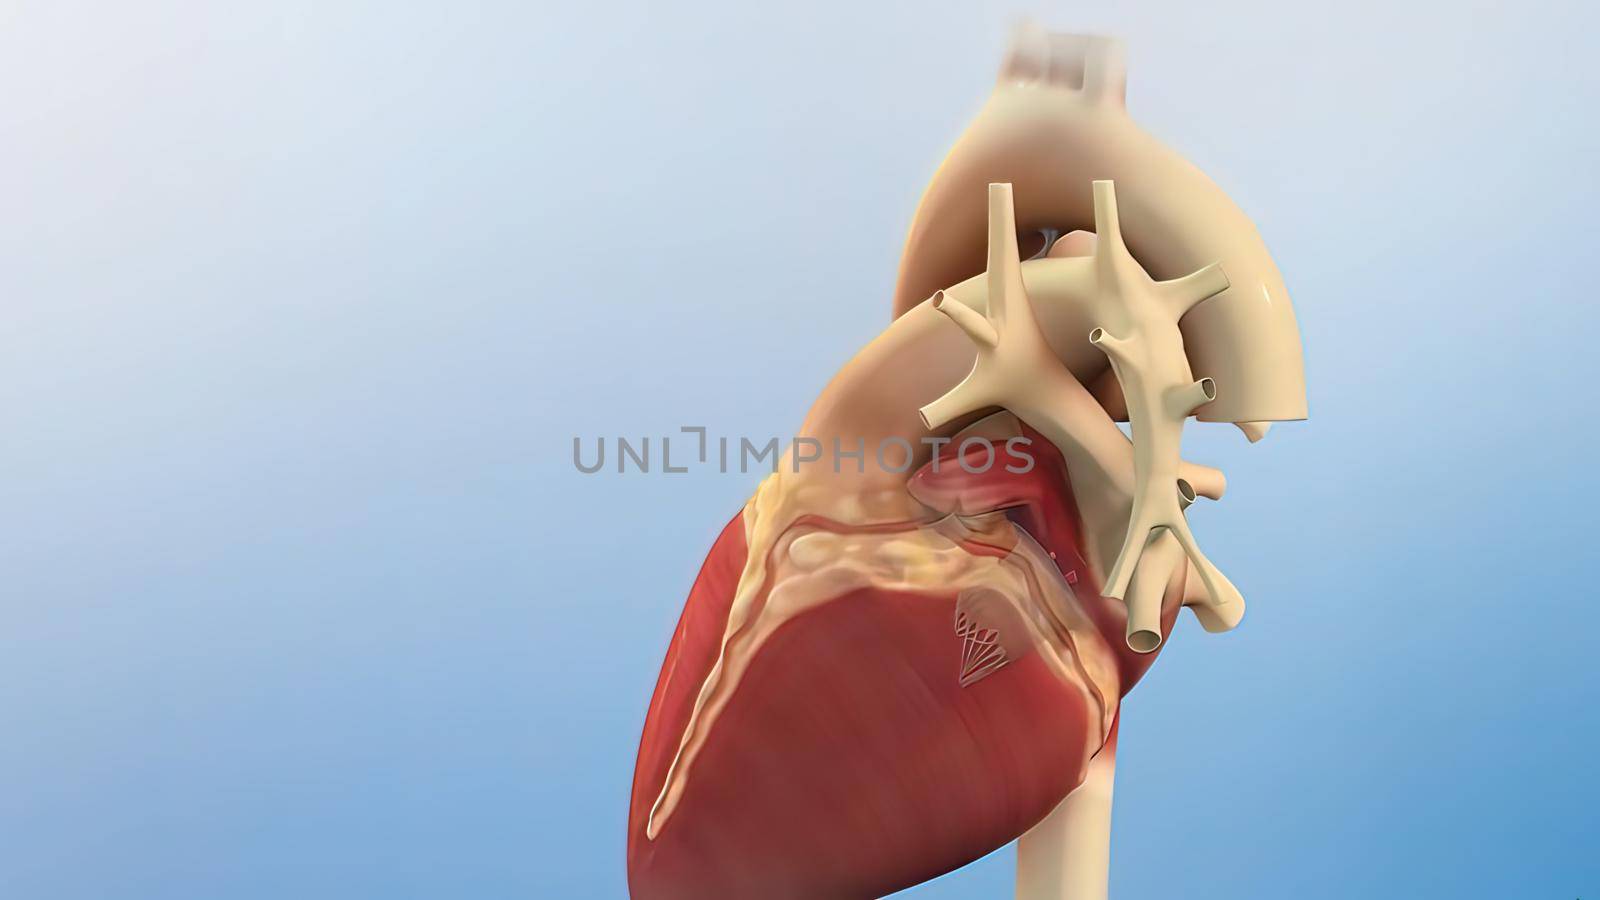 Human heart, realistic anatomy 3d model of human heart on the monitor, visual heart beating. Human anatomy, cardiovascular system.3D illustration